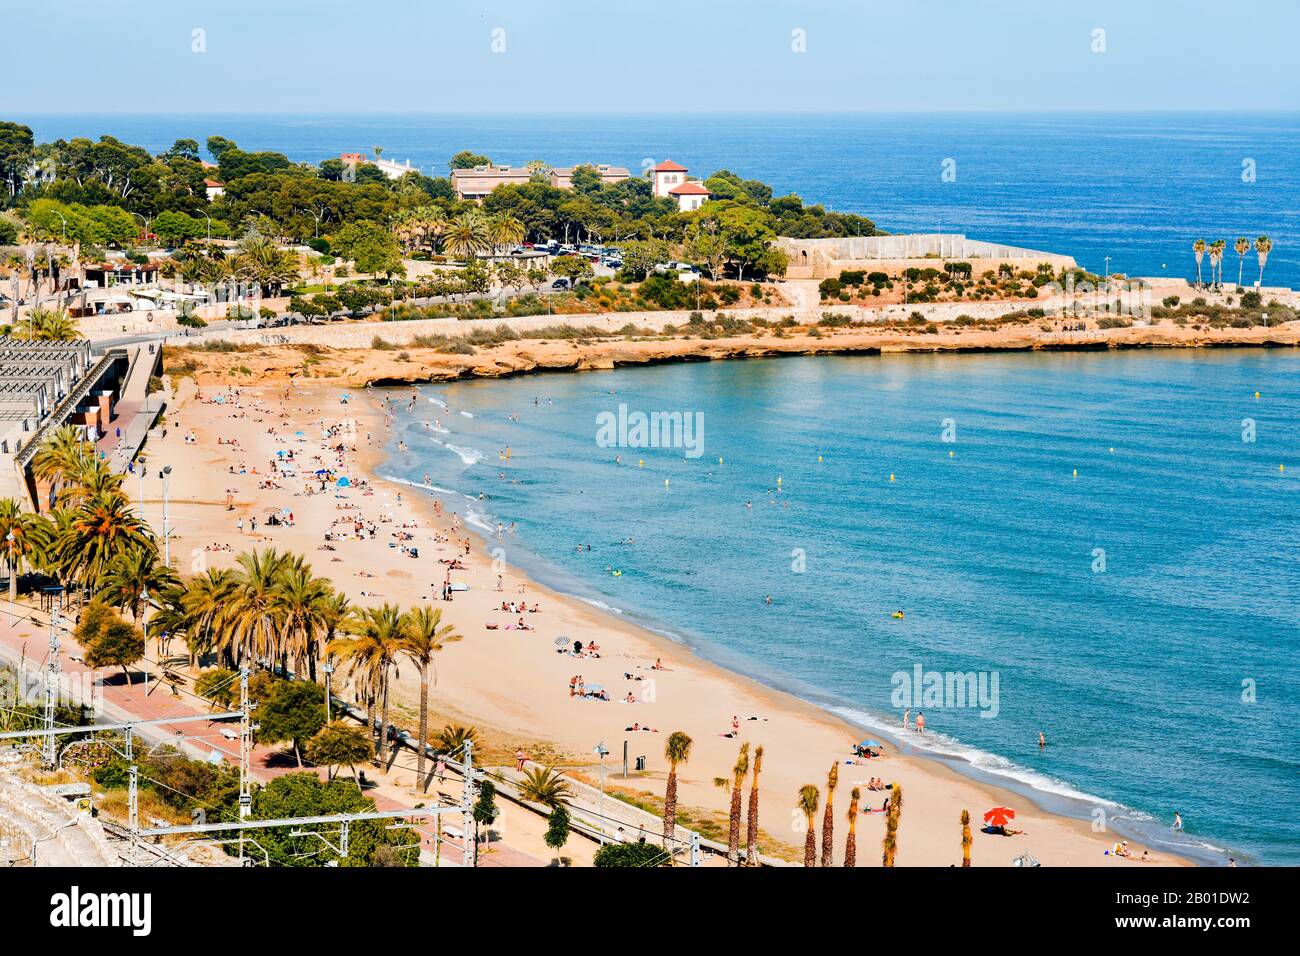 Tarragona, SPANIEN - 28. MAI 2017: Sonnenanbeter am Miracle Beach in Tarragona, Spanien. Die Stadt, in der berühmten Costa Daurada Gegend, hat mehrere urbane Bache Stockfoto